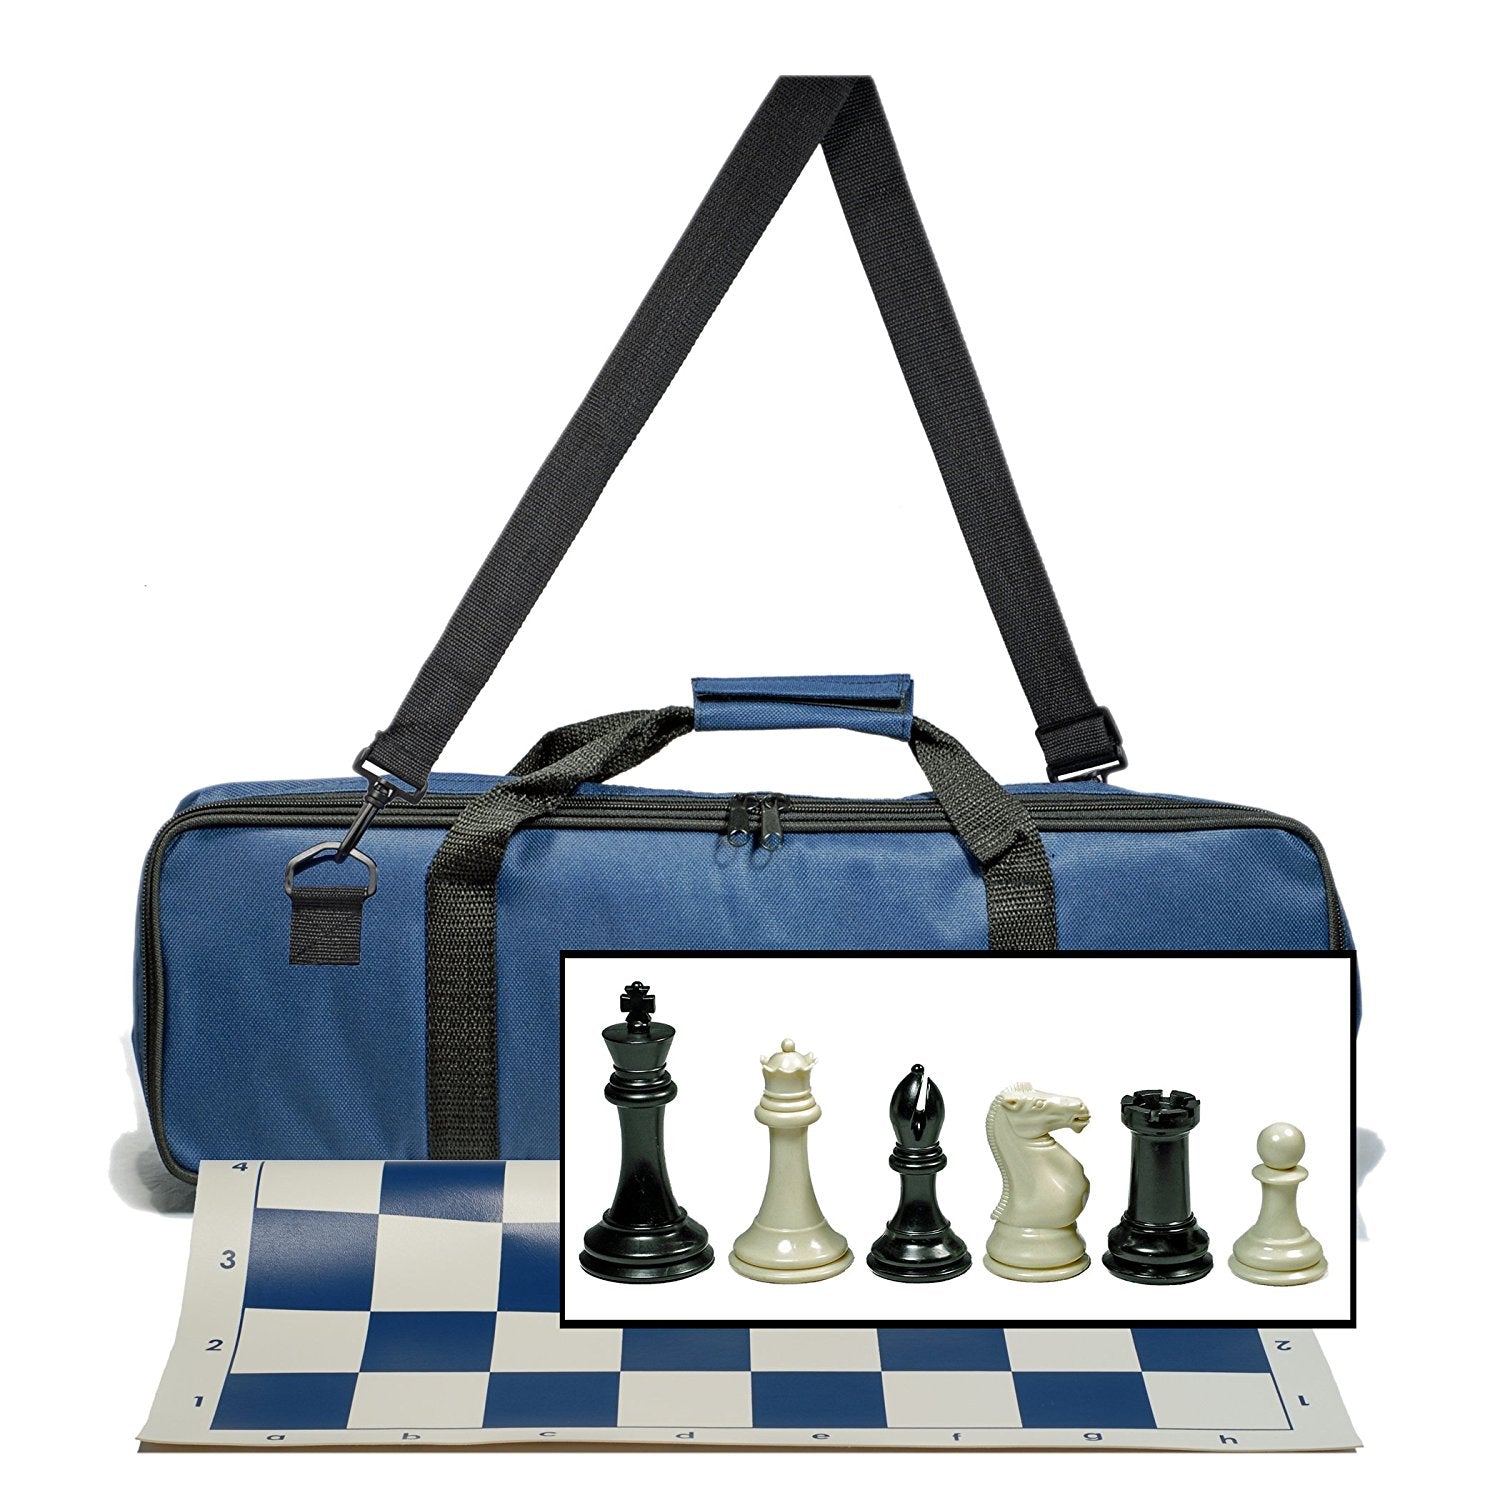 Endgame exercise #chesstok #checkmate #chesscom #grandmaster #magnusca